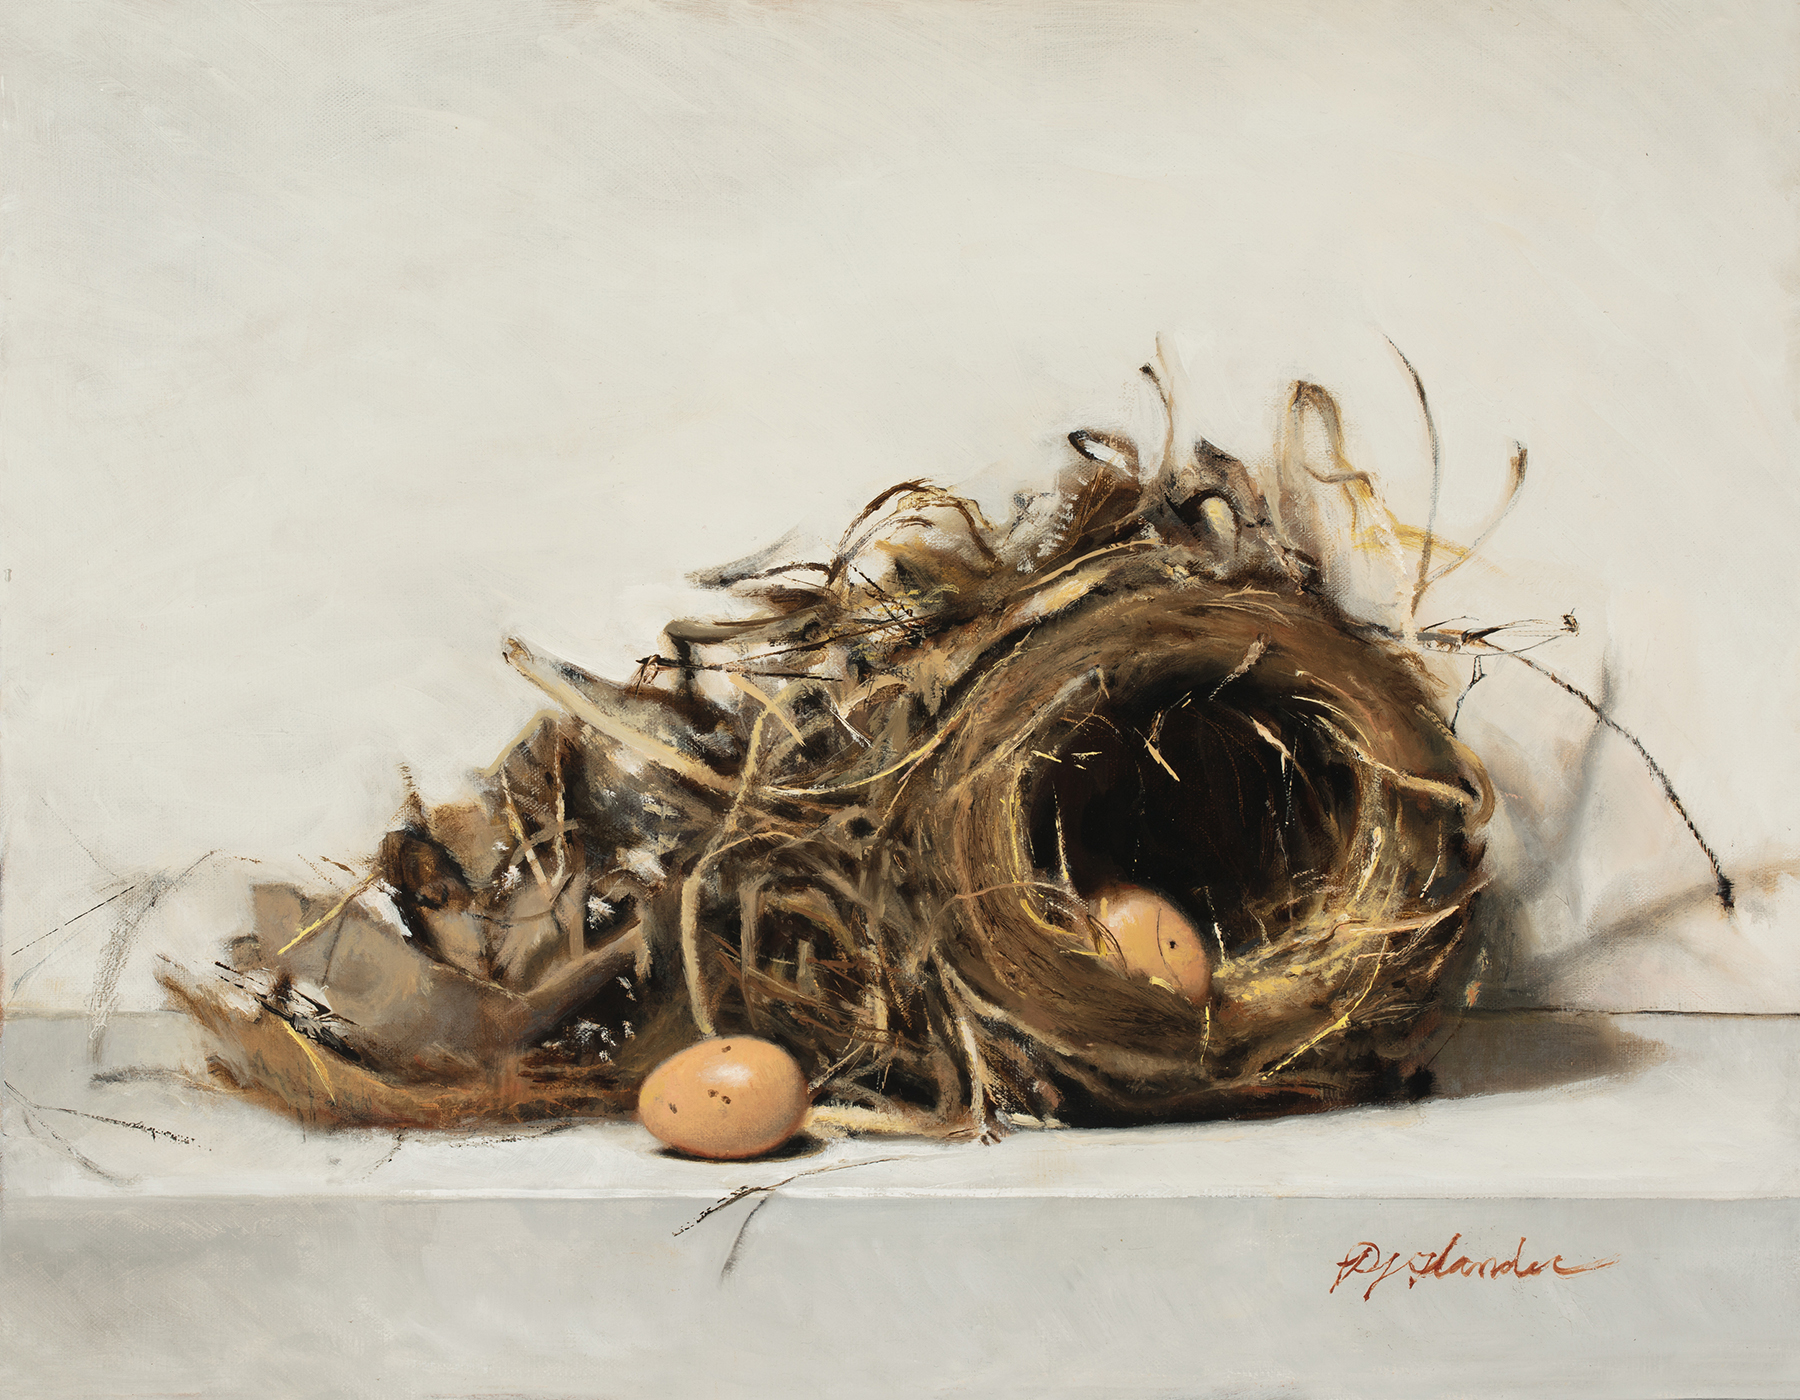 Patrick Glander, Nest